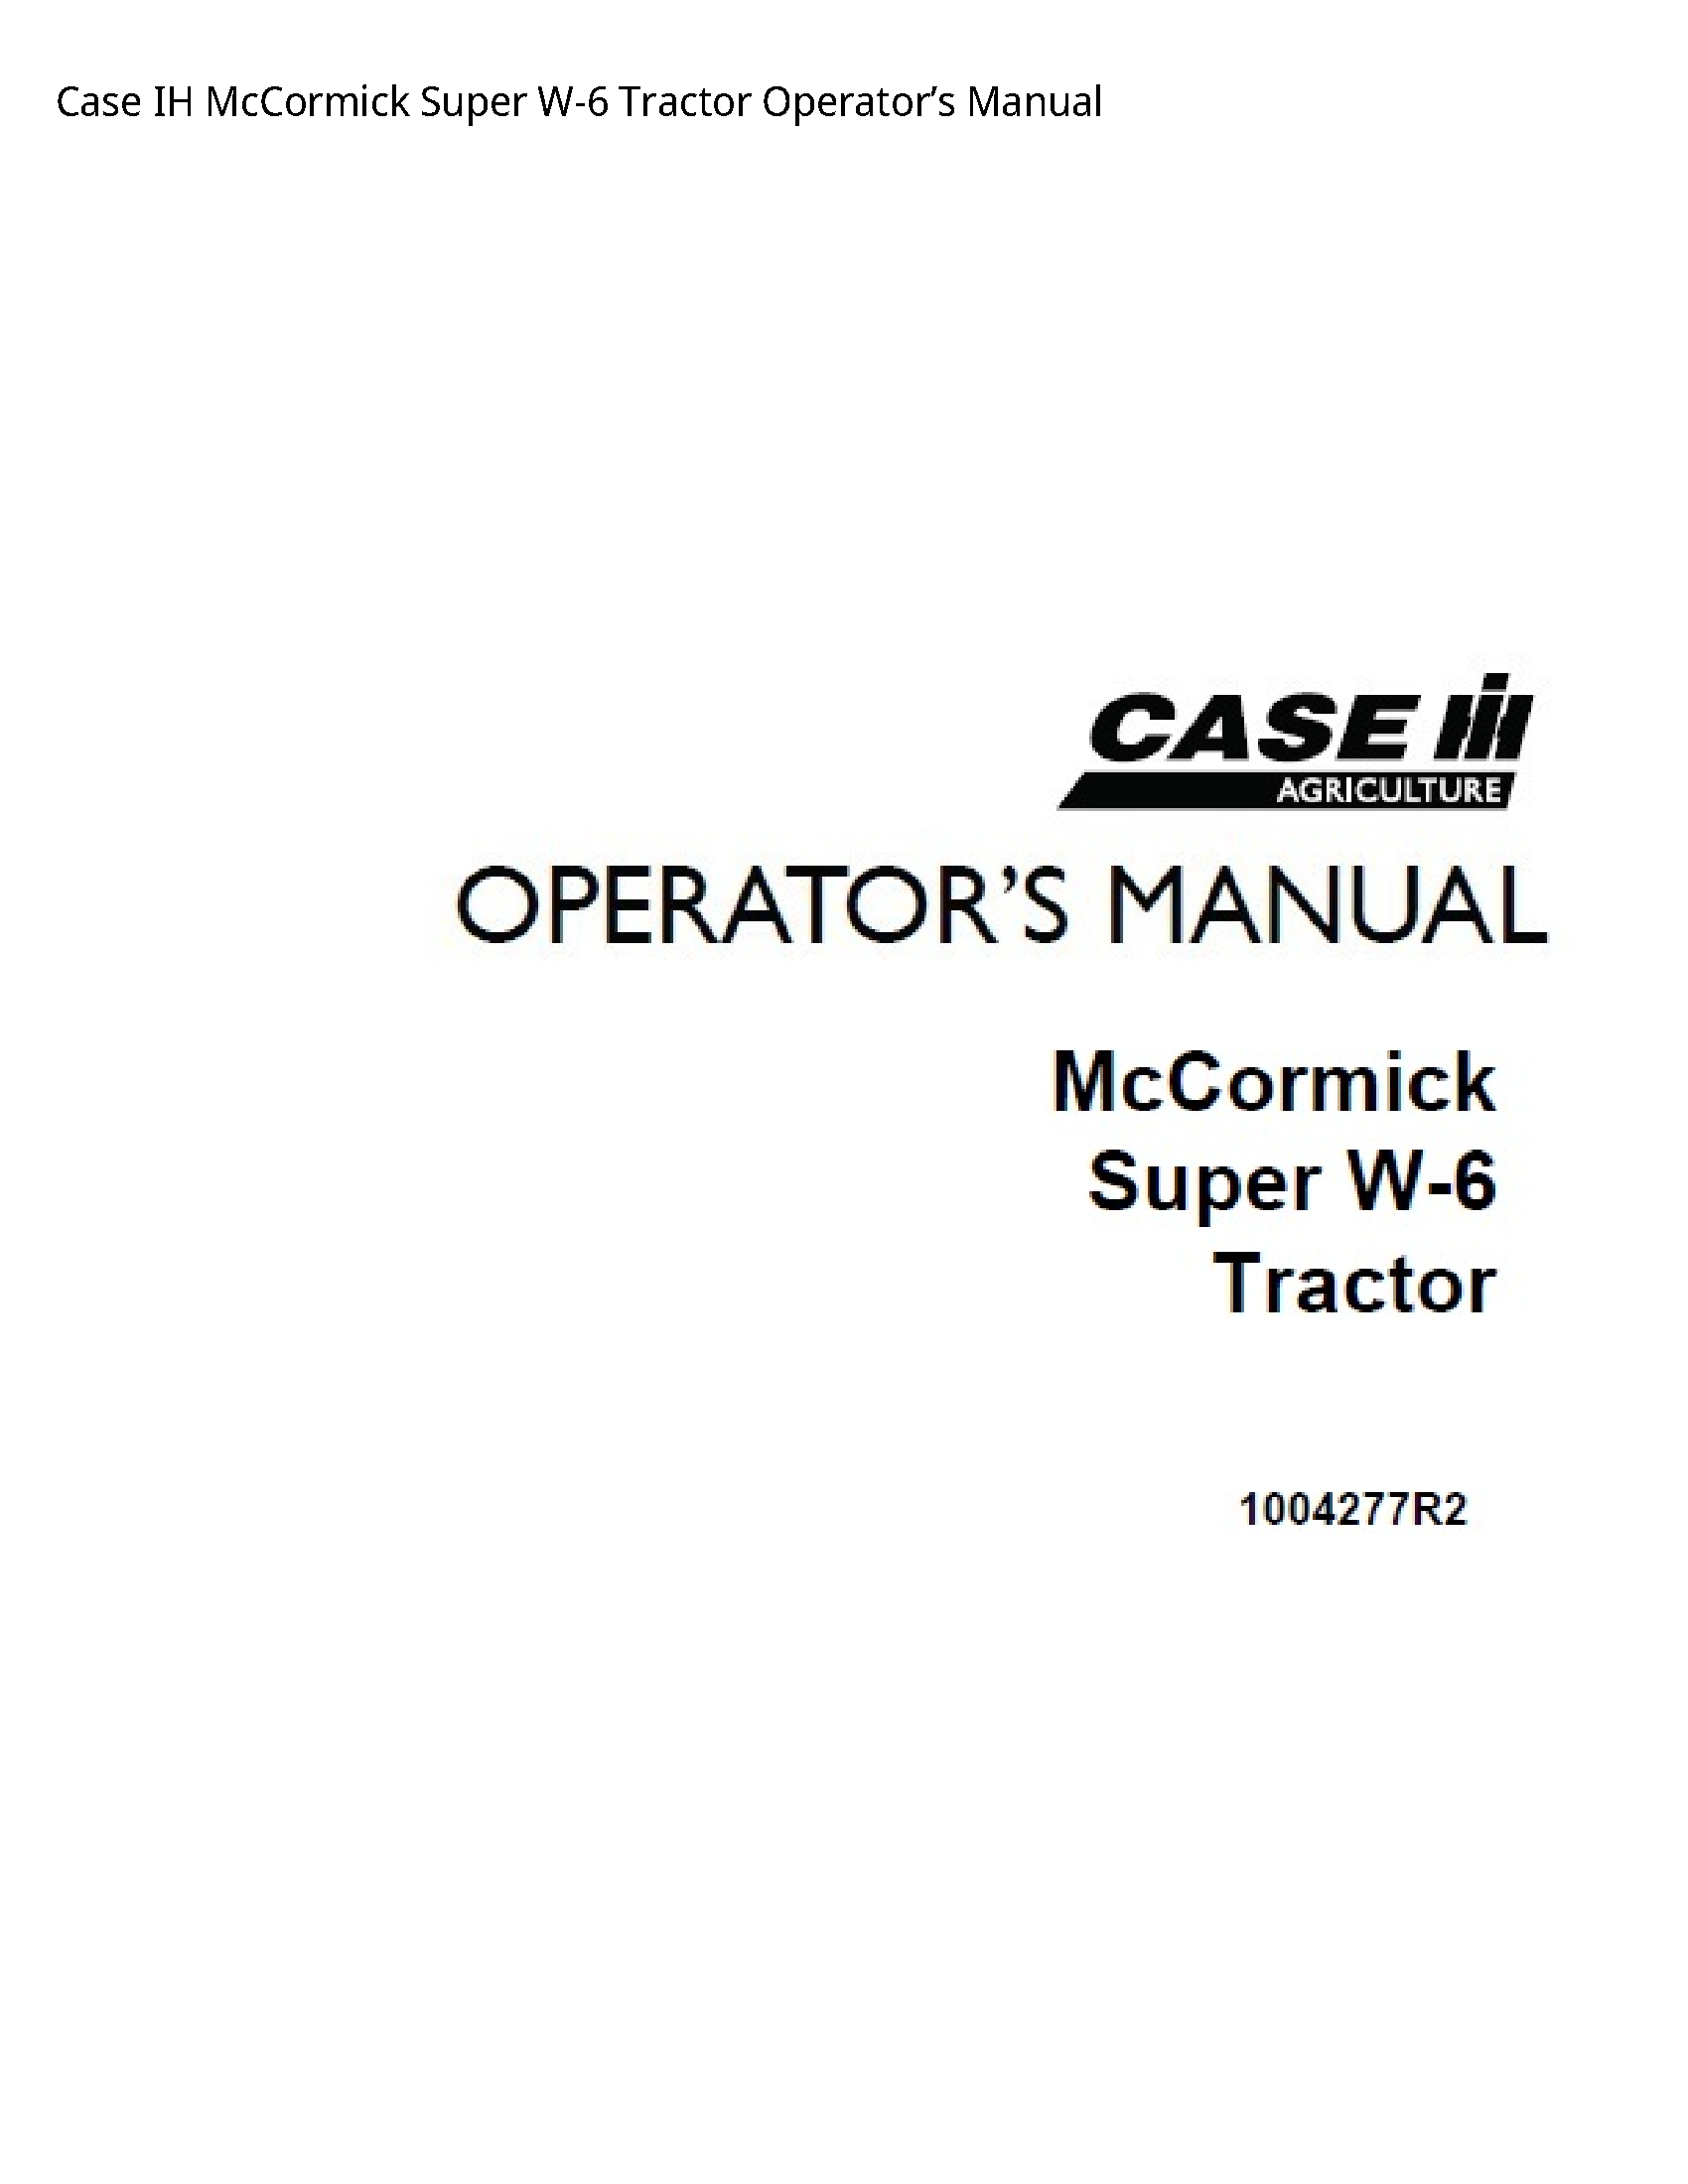 Case/Case IH W-6 IH McCormick Super Tractor Operator’s manual